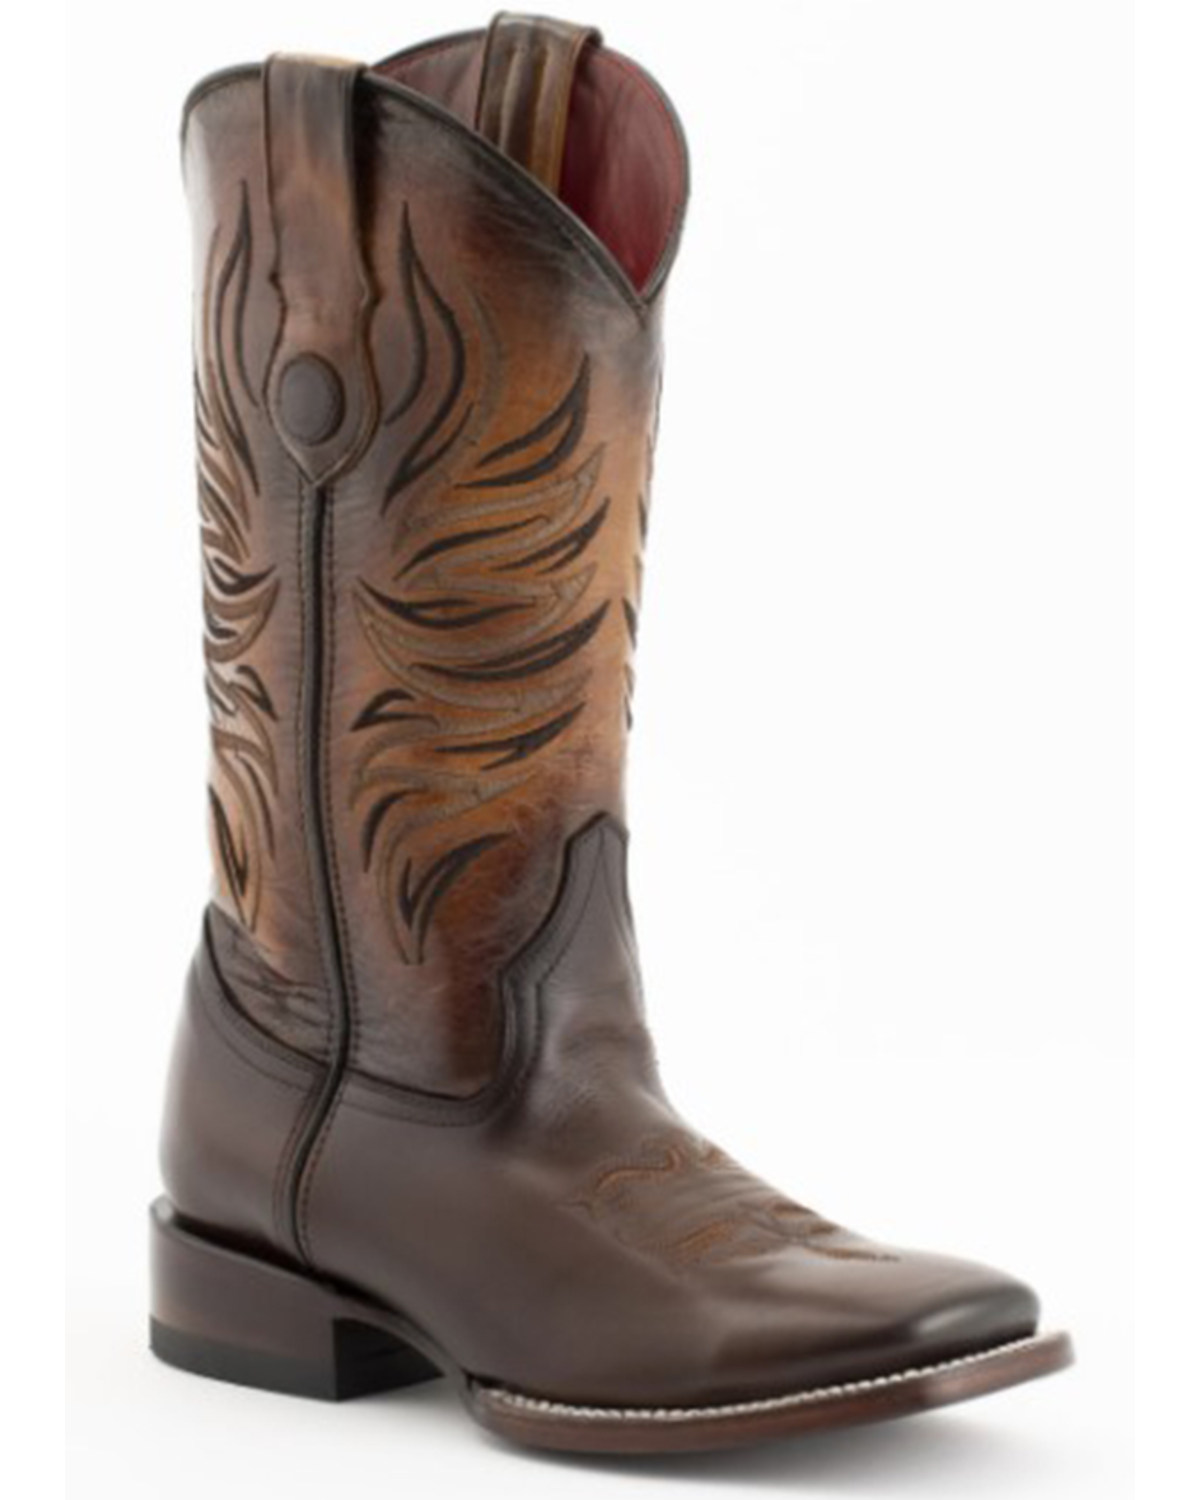 Ferrini Women's Fuego Western Boots - Broad Square Toe